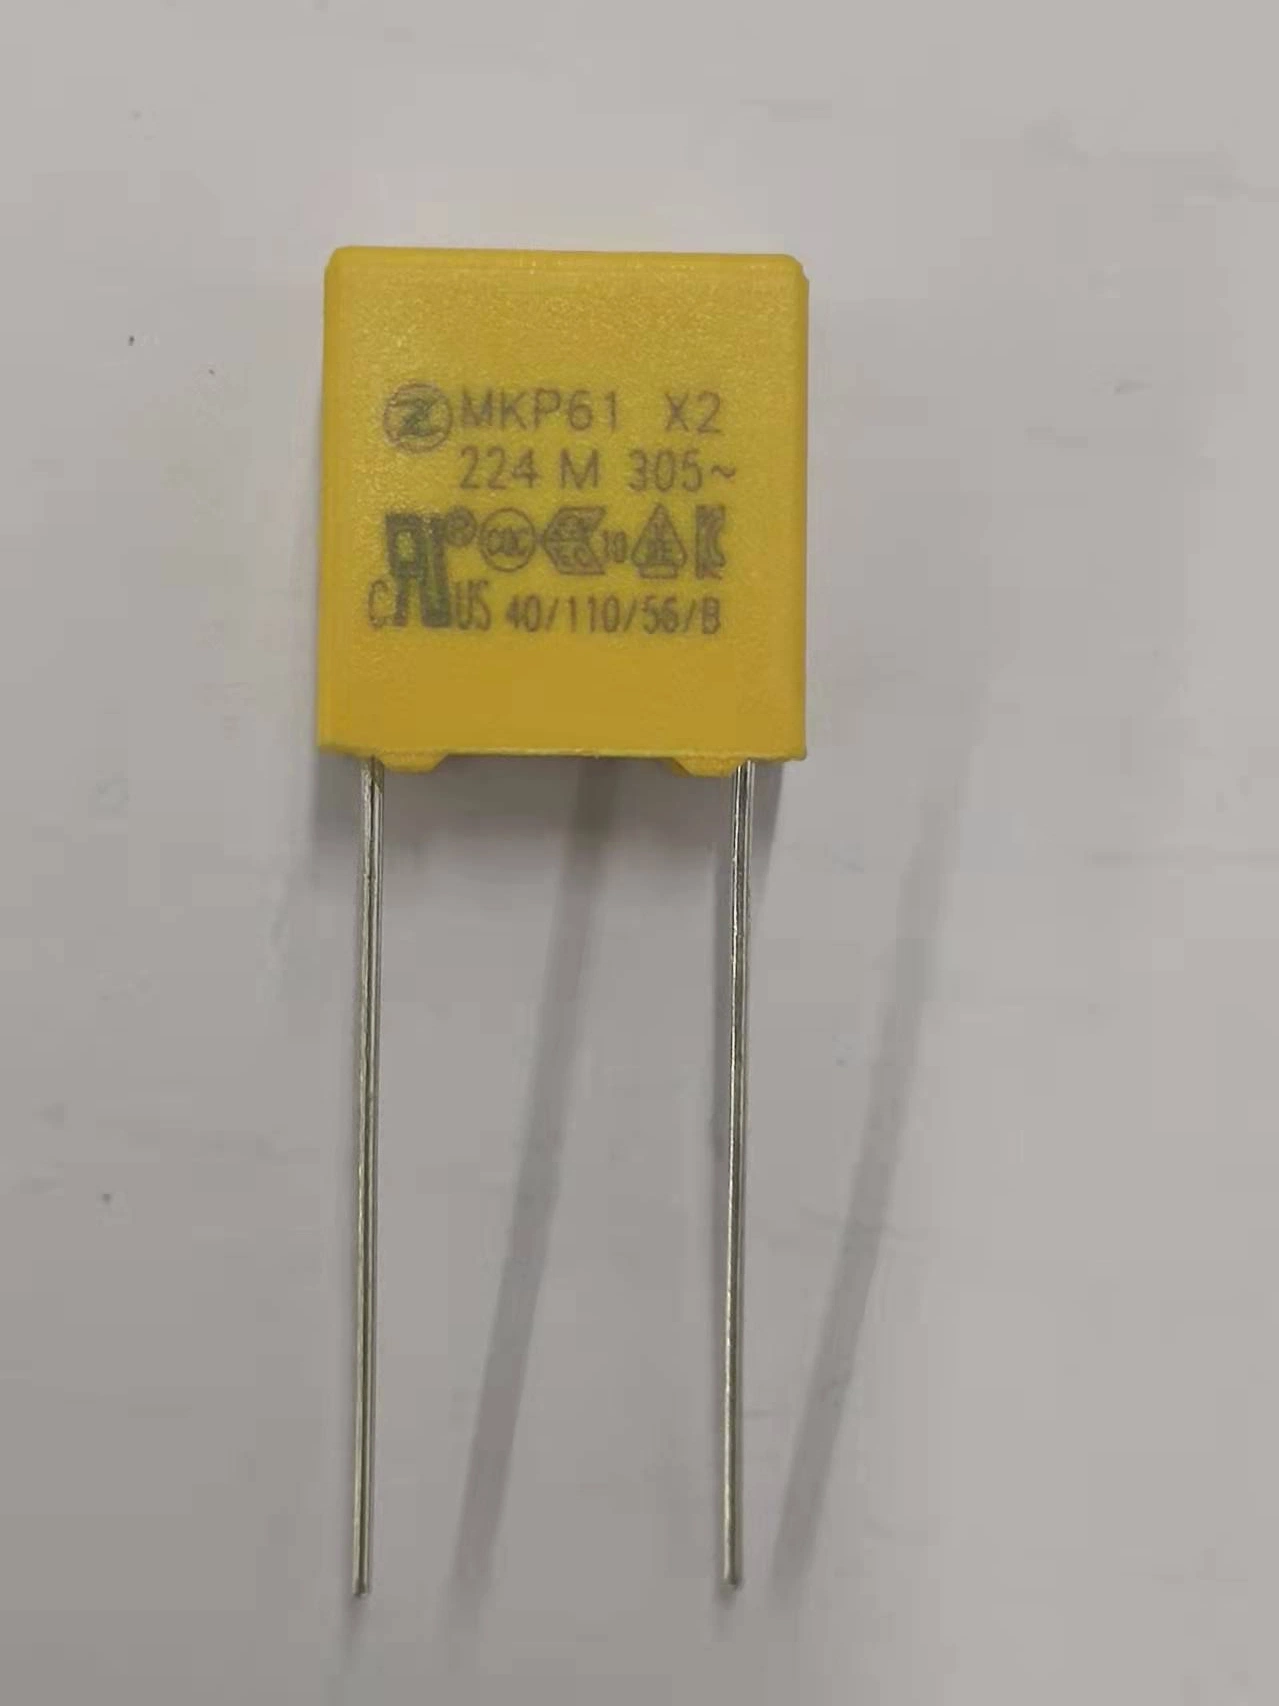 Condensador de supressão P10 de 0,22UF 305VAC, com interferência de película de polipropileno metalizada (Classe X2) (MKP61)